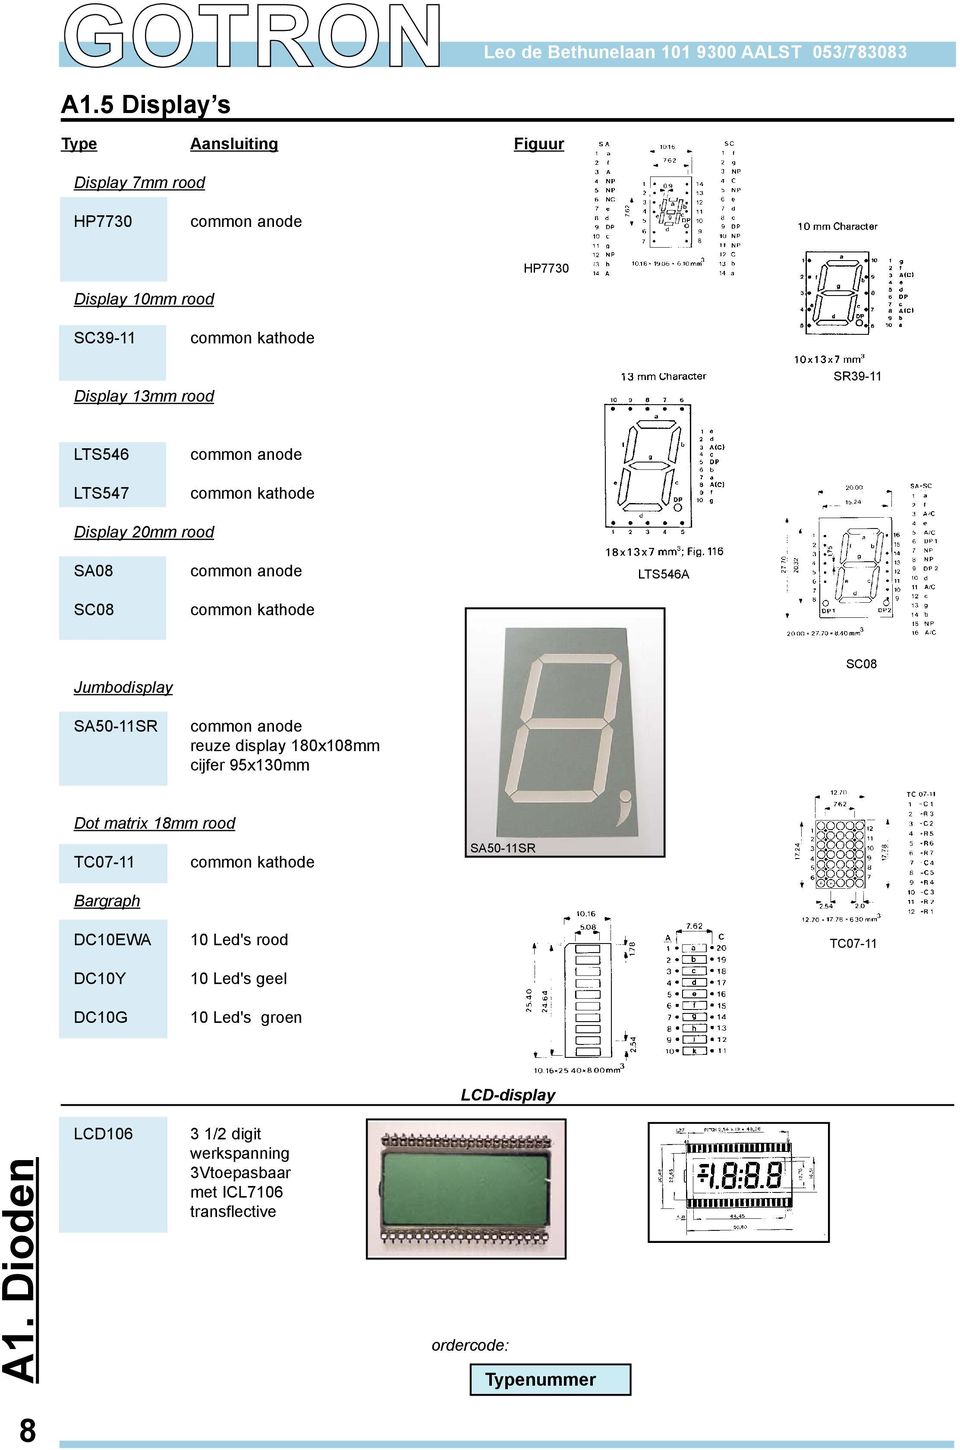 common anode reuze display 180x108mm cijfer 95x130mm Dot matrix 18mm rood TC07-11 common kathode SA50-11SR Bargraph DC10EWA DC10Y DC10G 10